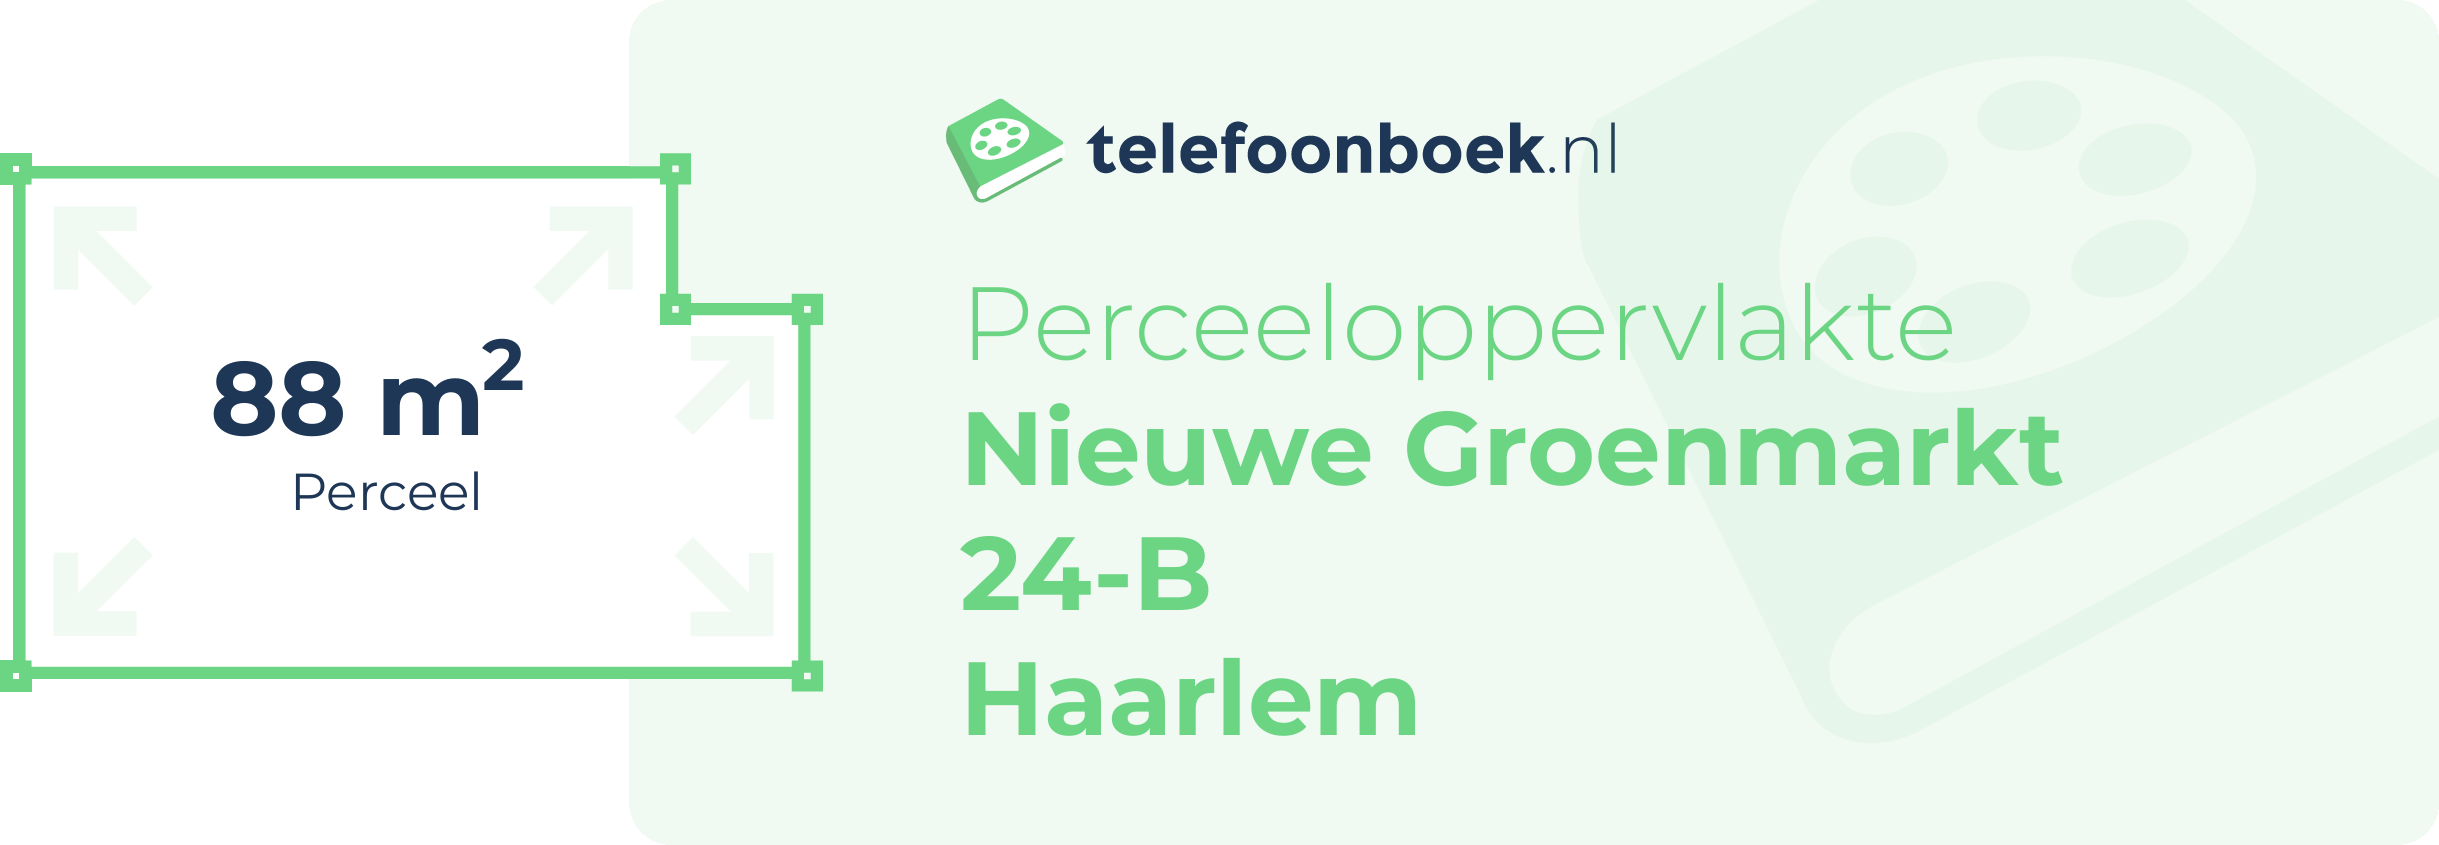 Perceeloppervlakte Nieuwe Groenmarkt 24-B Haarlem